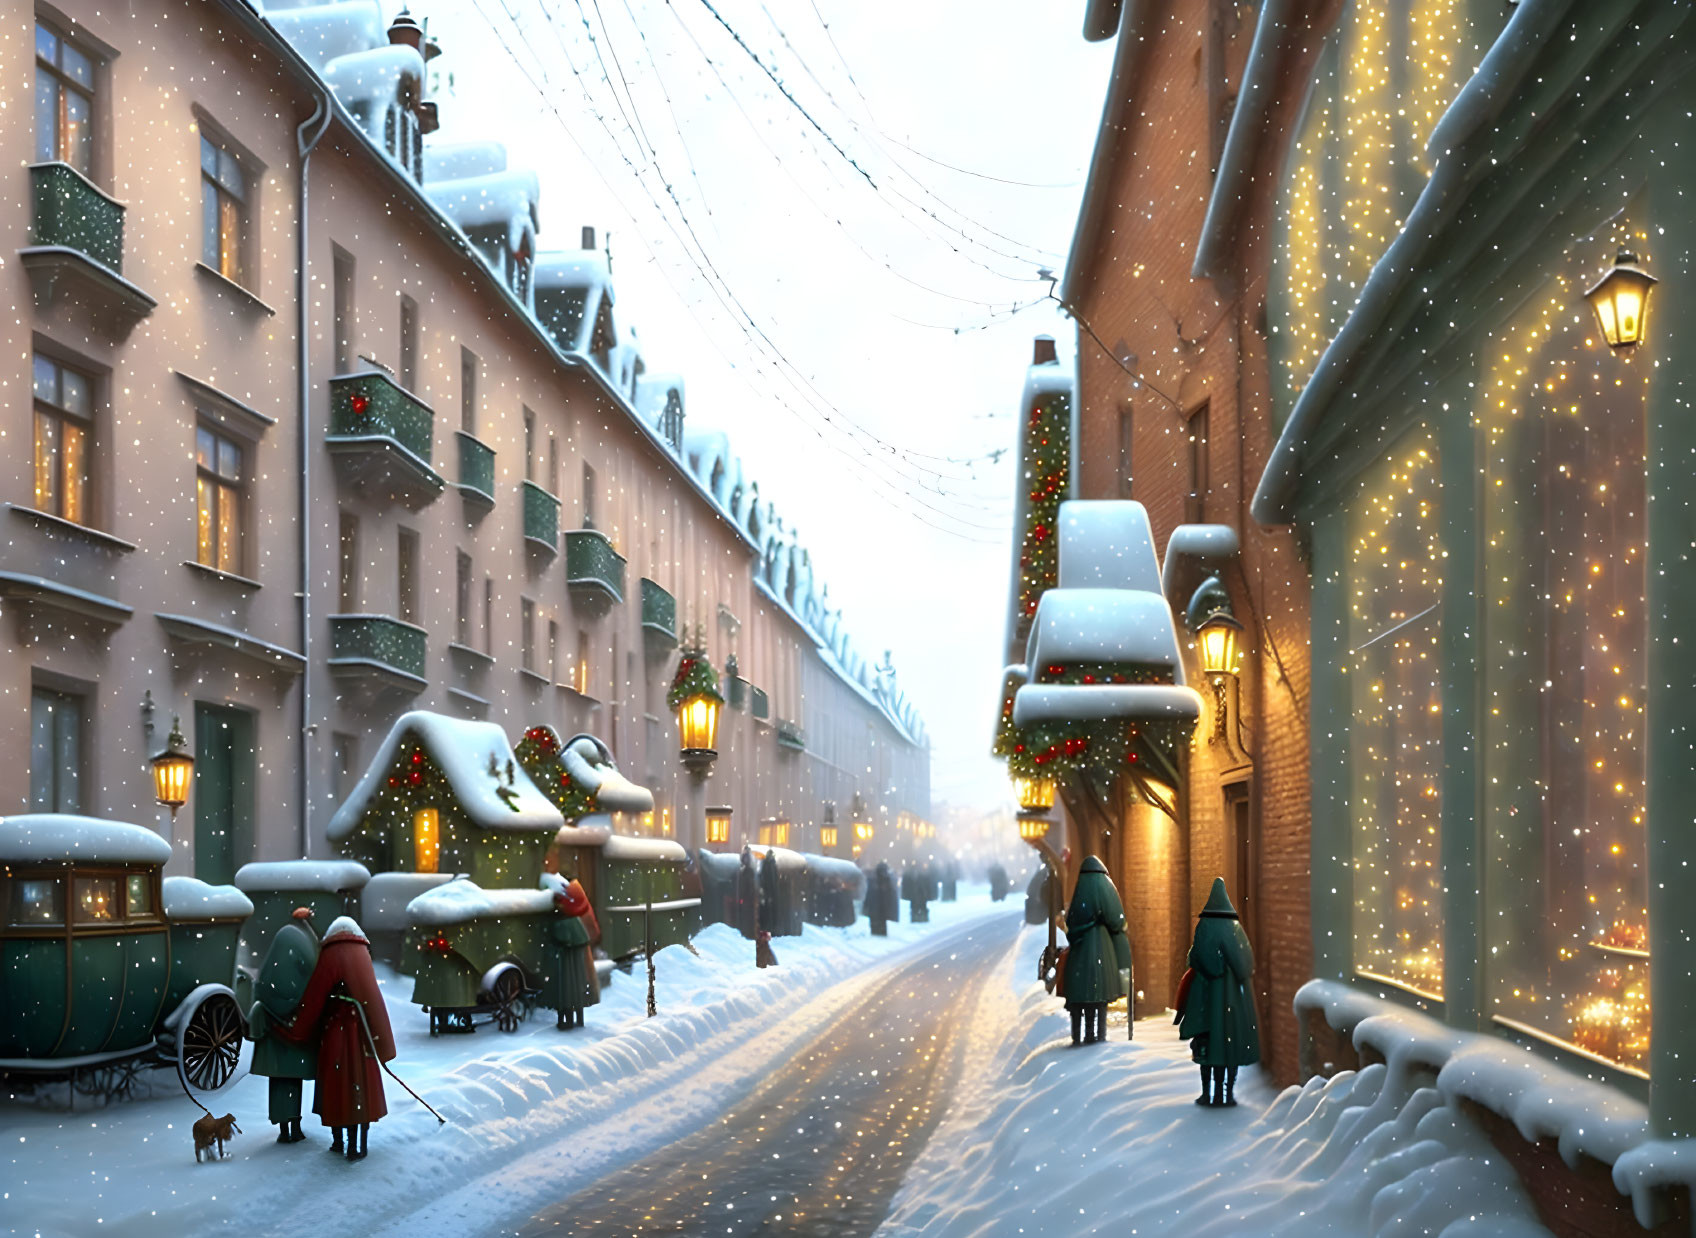 A Polish street before Christmas